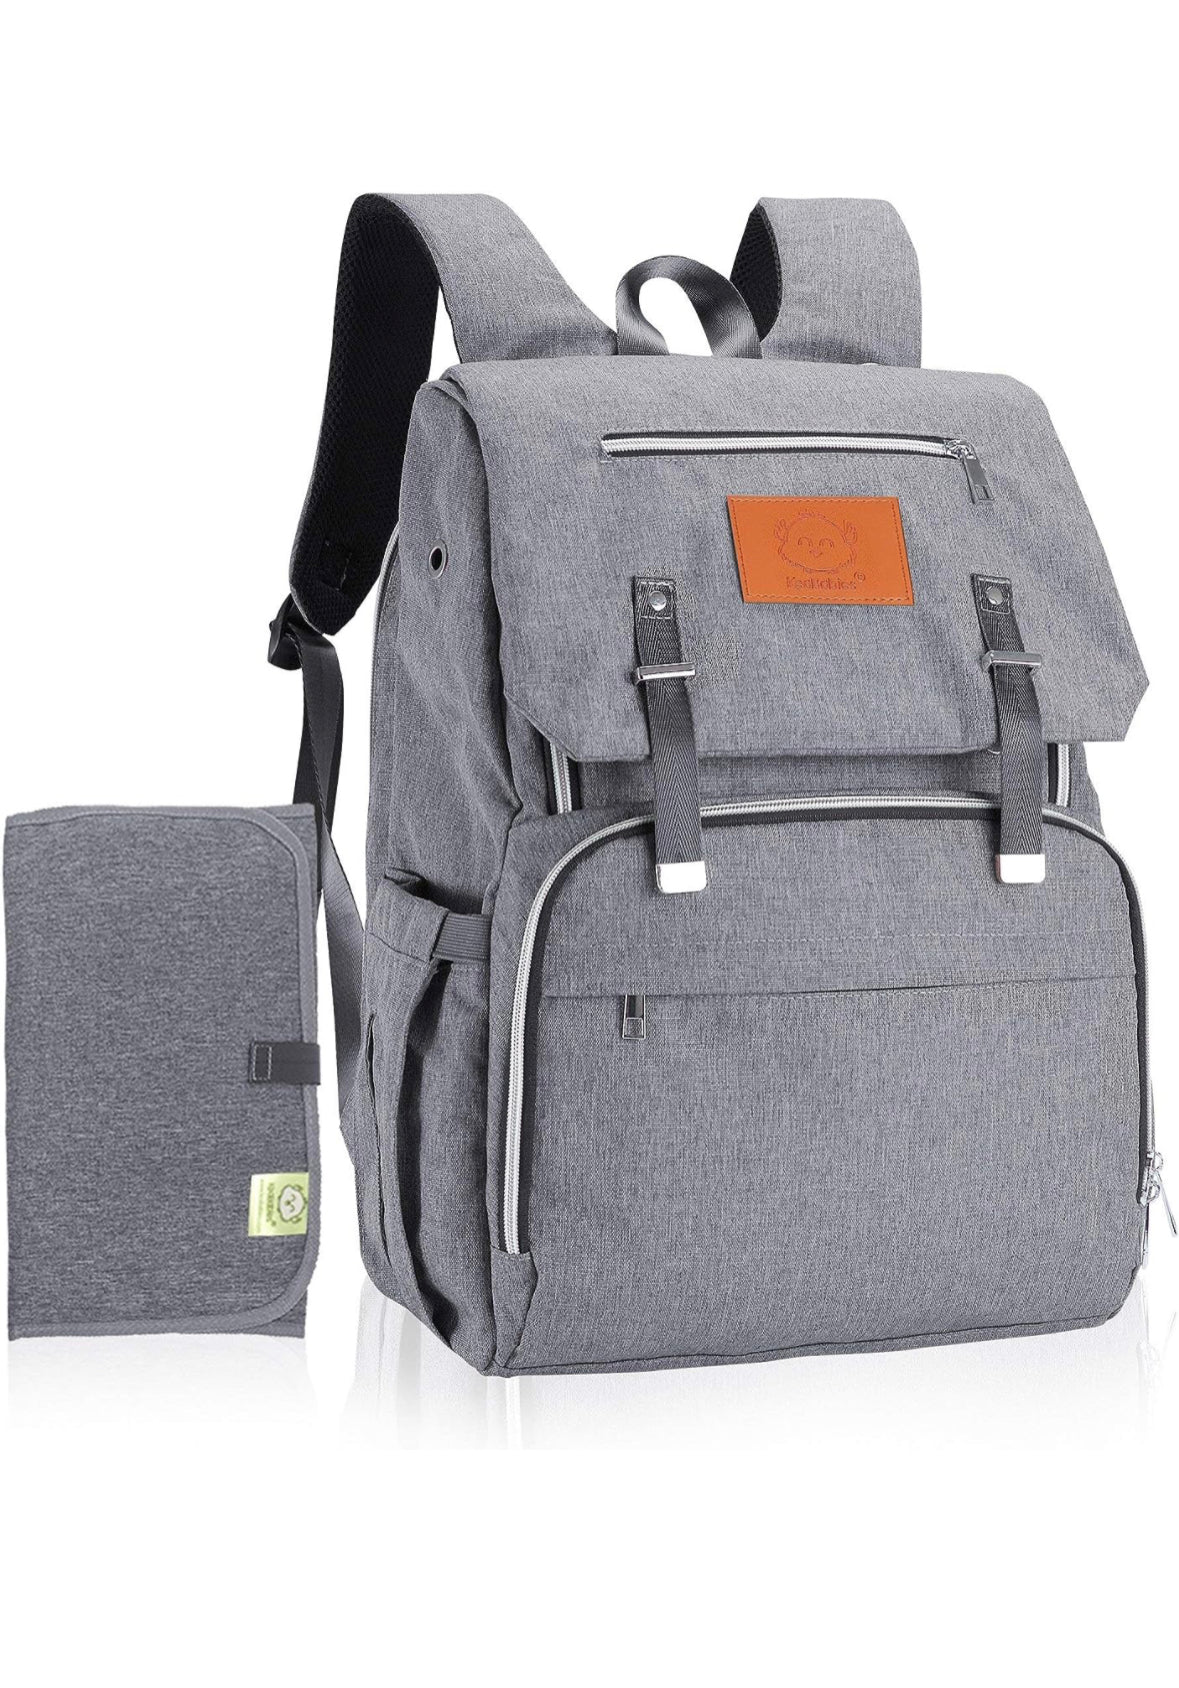 KeaBabies Explorer Diaper Backpack.